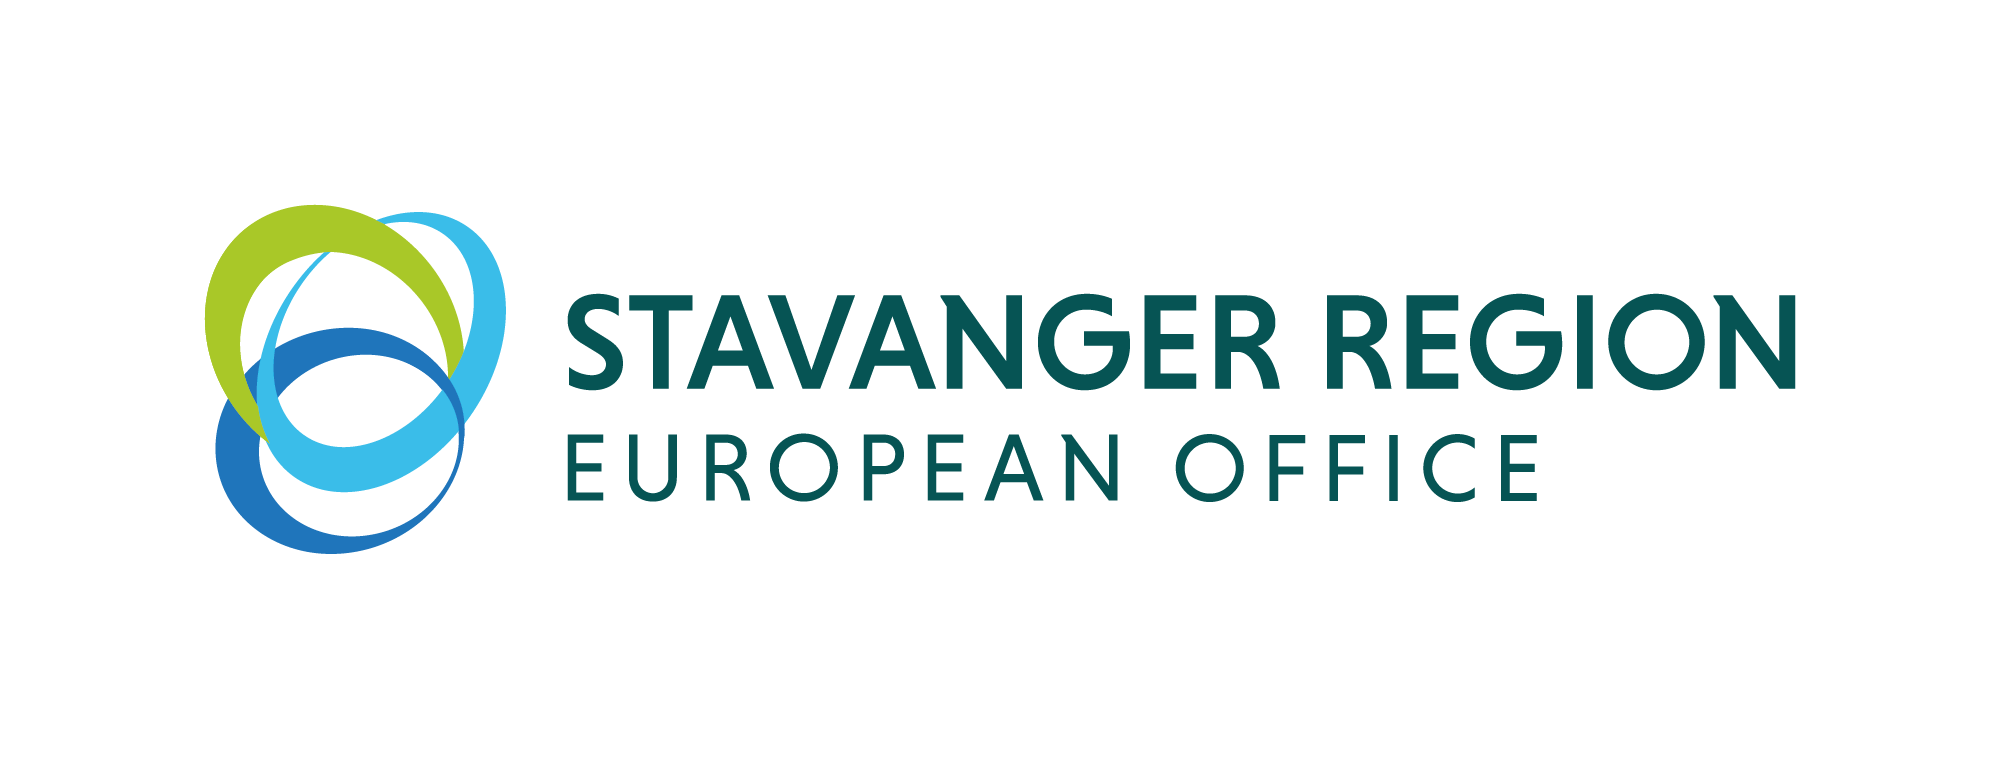 Stavanger Region European Office